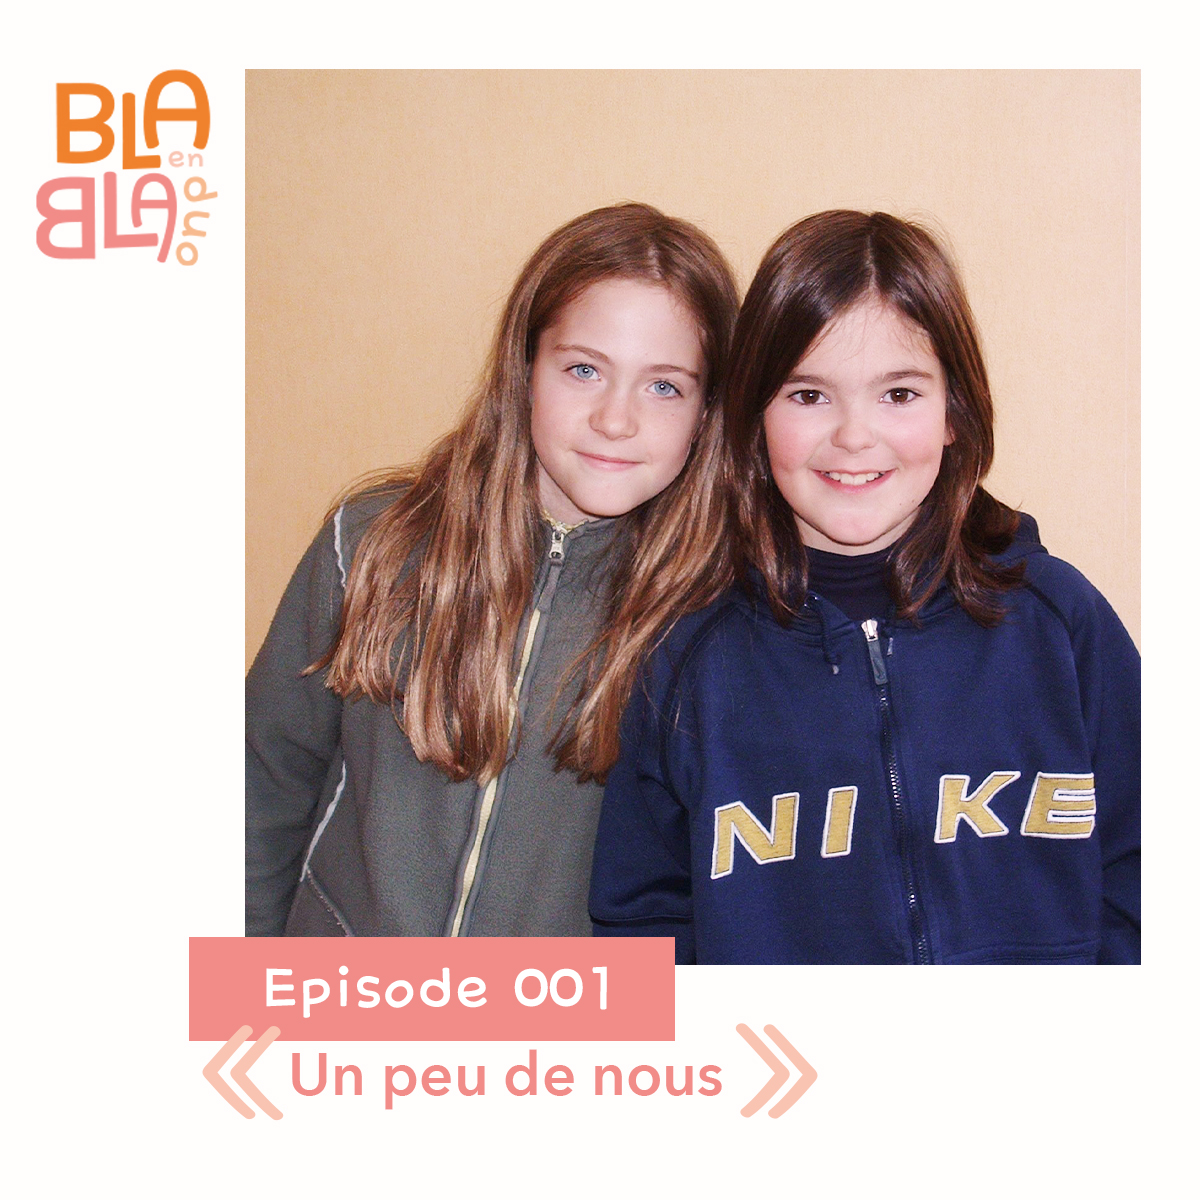 Miniature de l'episode 1 du podcast de Bla Bla en duo